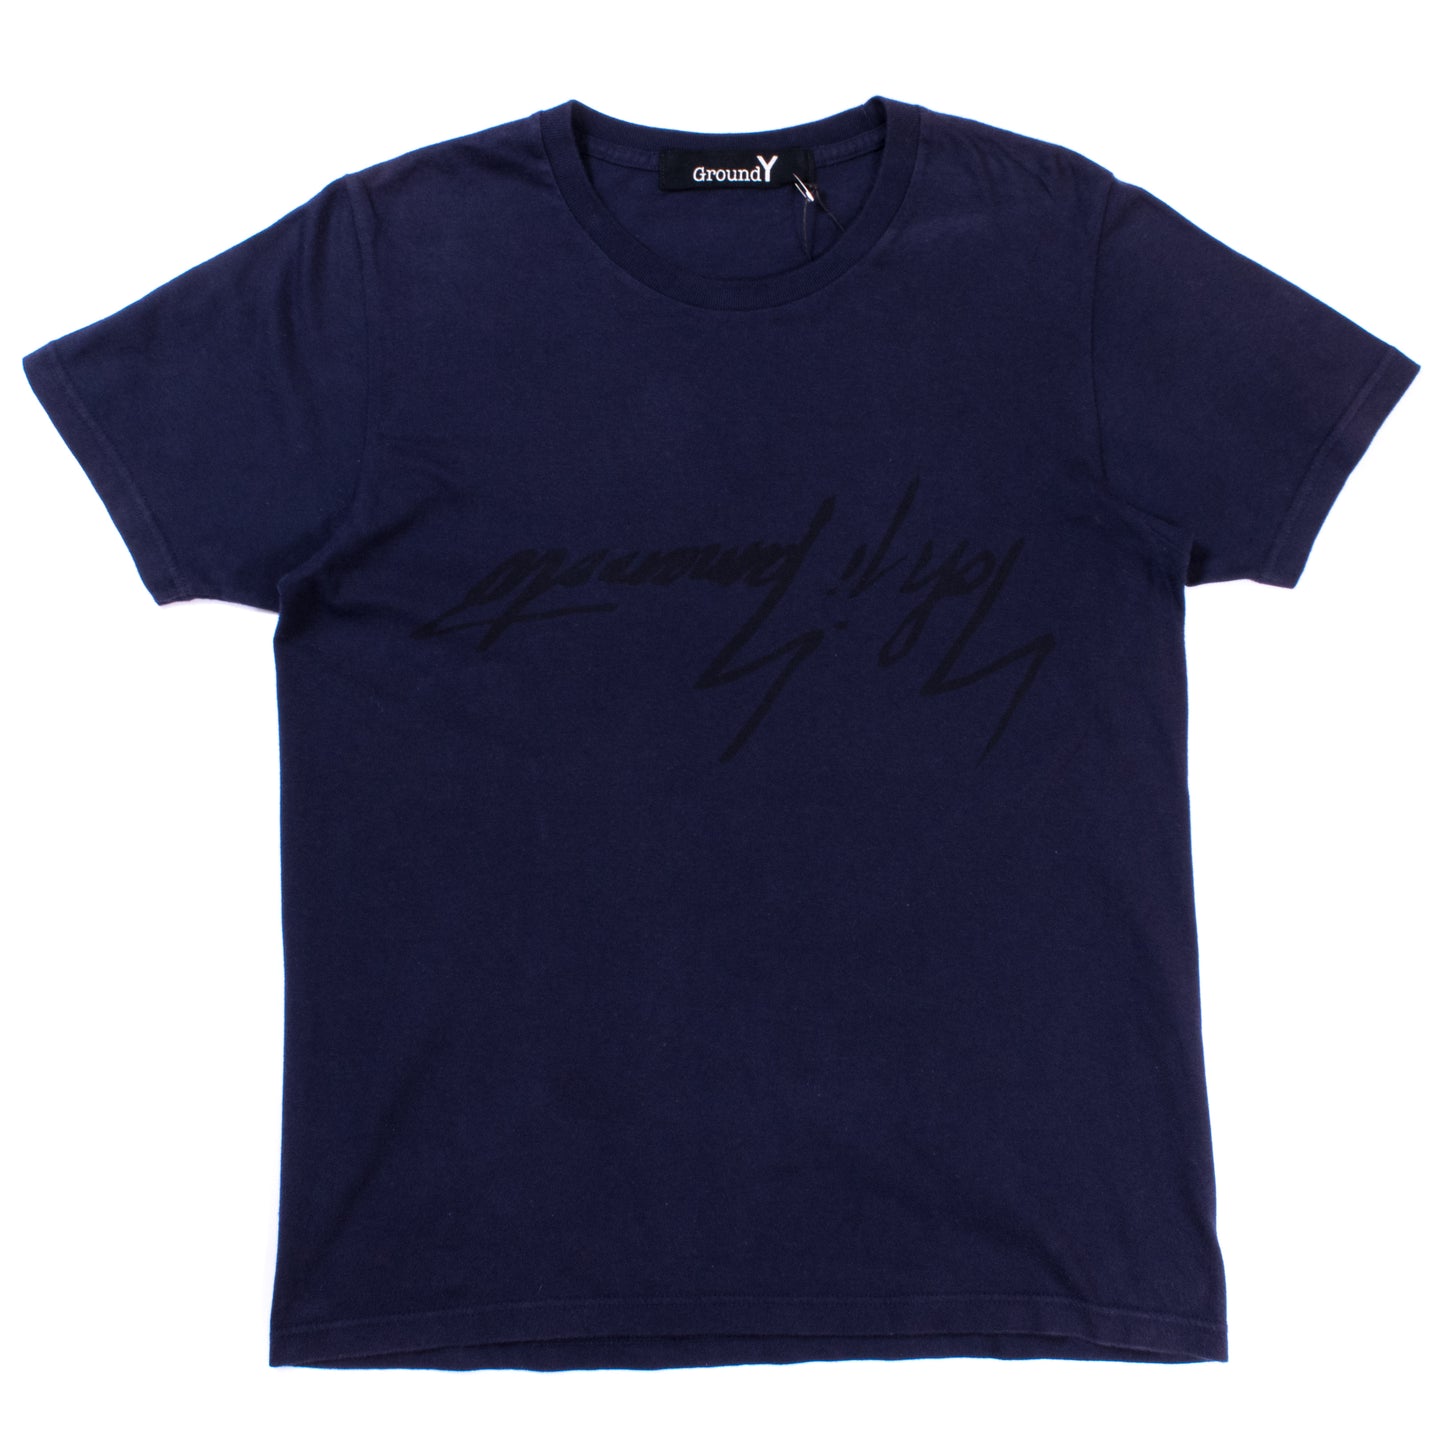 Yohji Yamamoto GroundY "oʇoɯɐɯɐʎ ᴉɾɥoʎ" T-Shirt